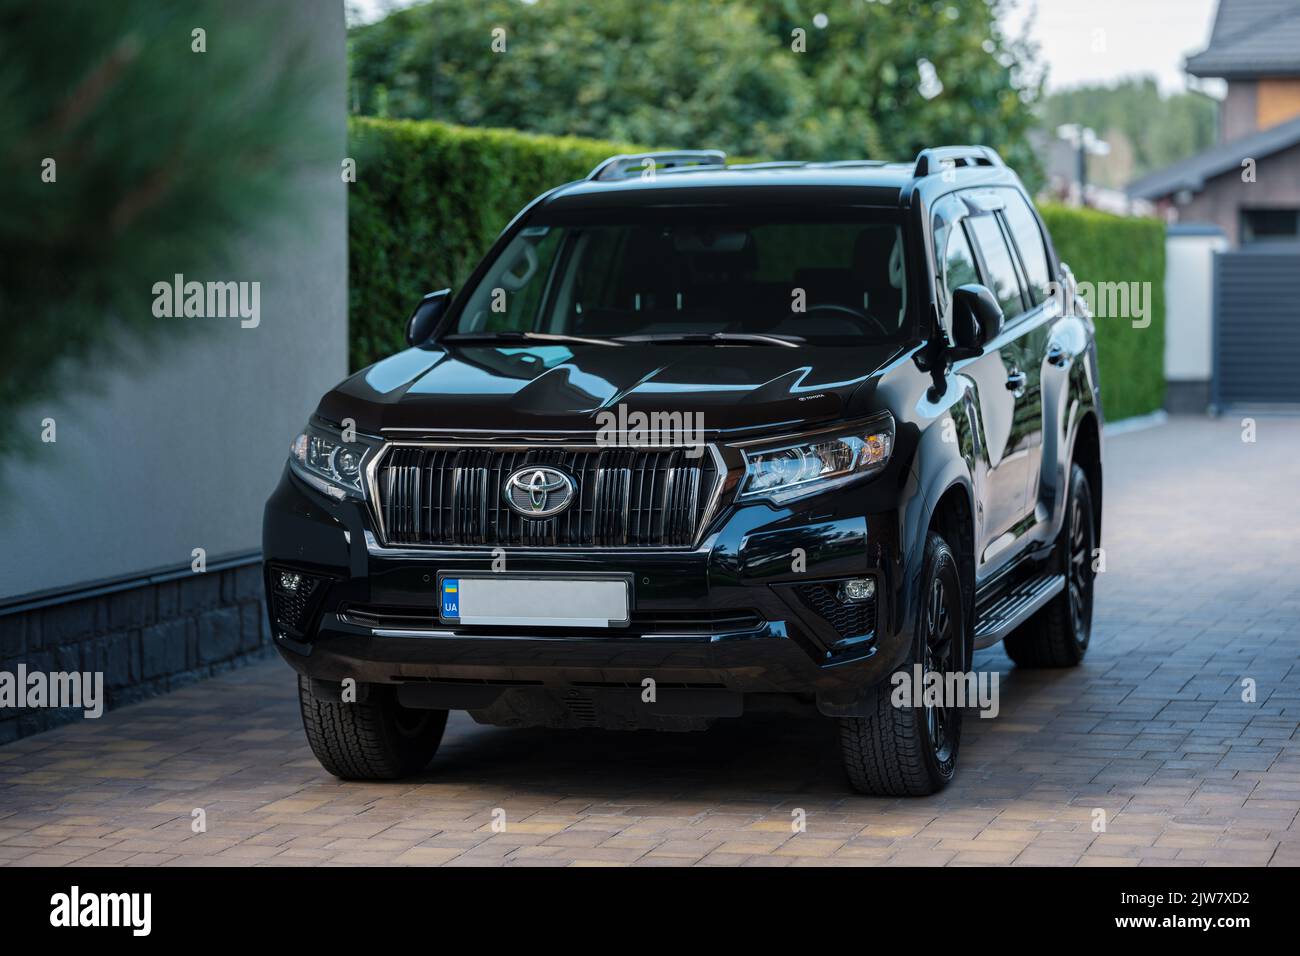 Kyiv, Ukraine - August 23th 2022: Toyota Land Cruiser Prado in black color Stock Photo